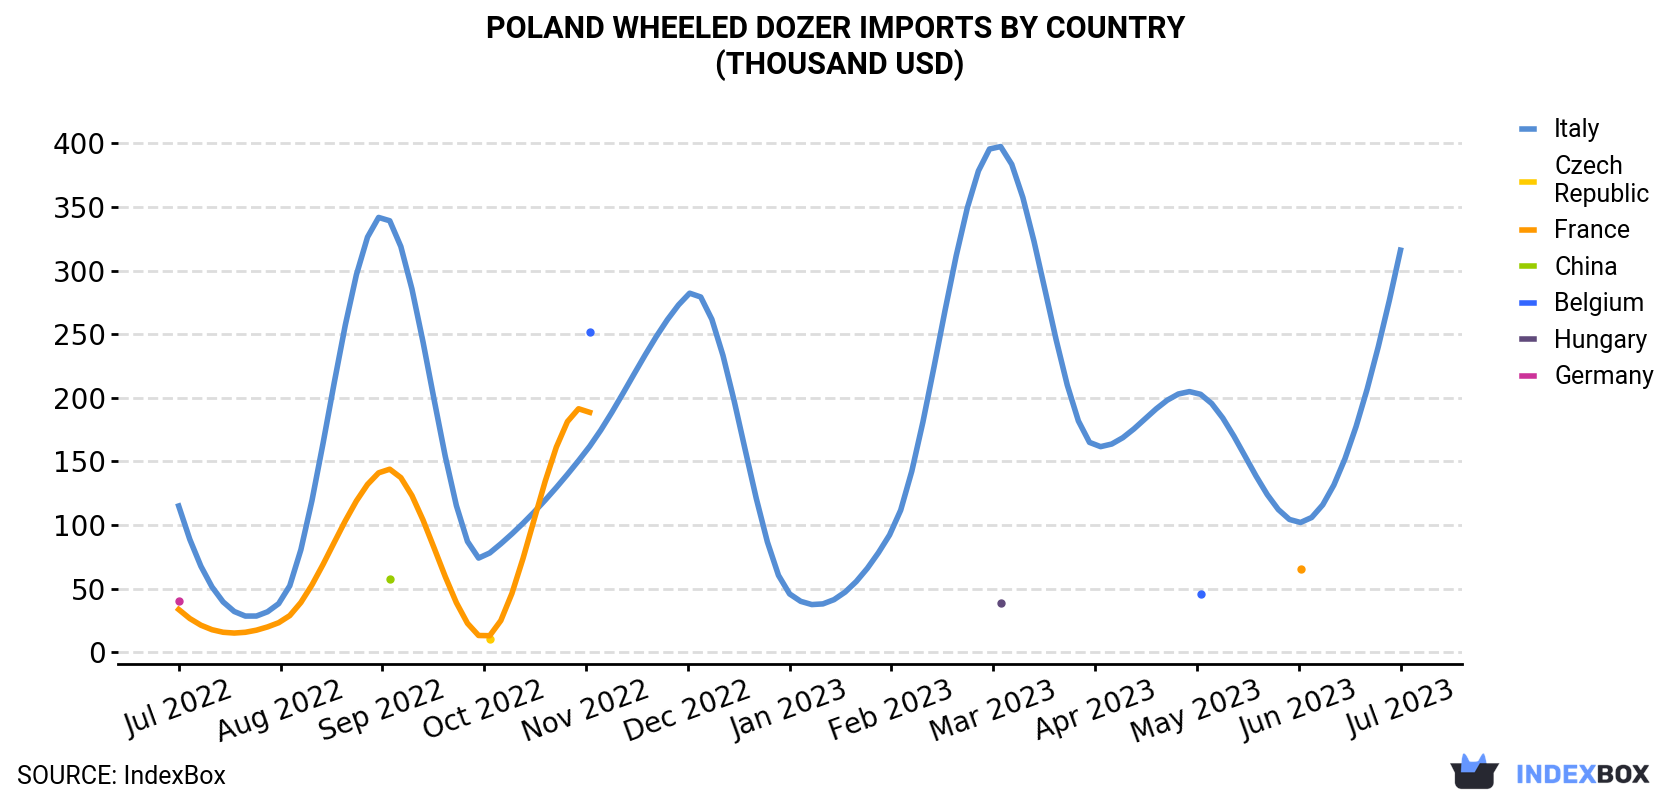 Poland Wheeled Dozer Imports By Country (Thousand USD)